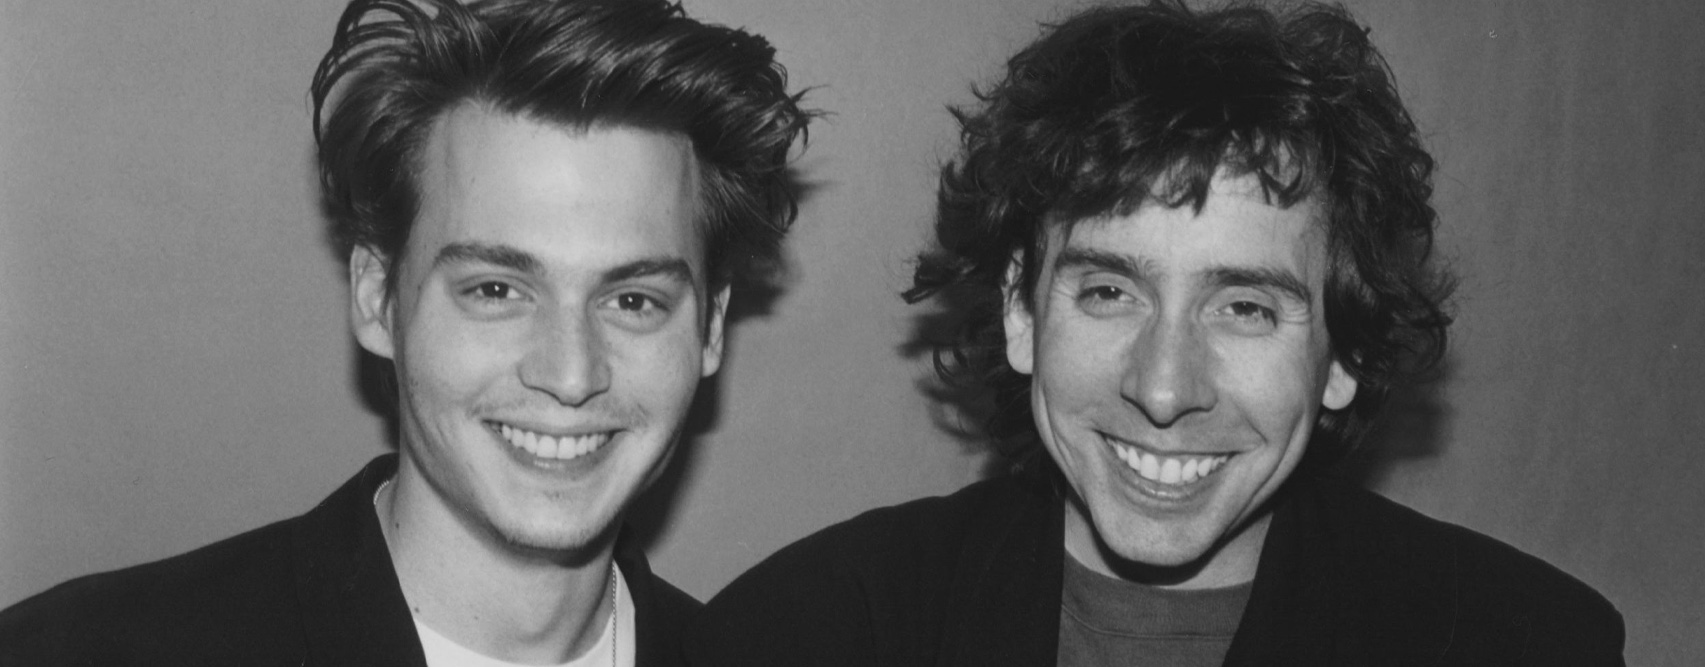 Tim Burton e Johnny Depp: tutti i film insieme